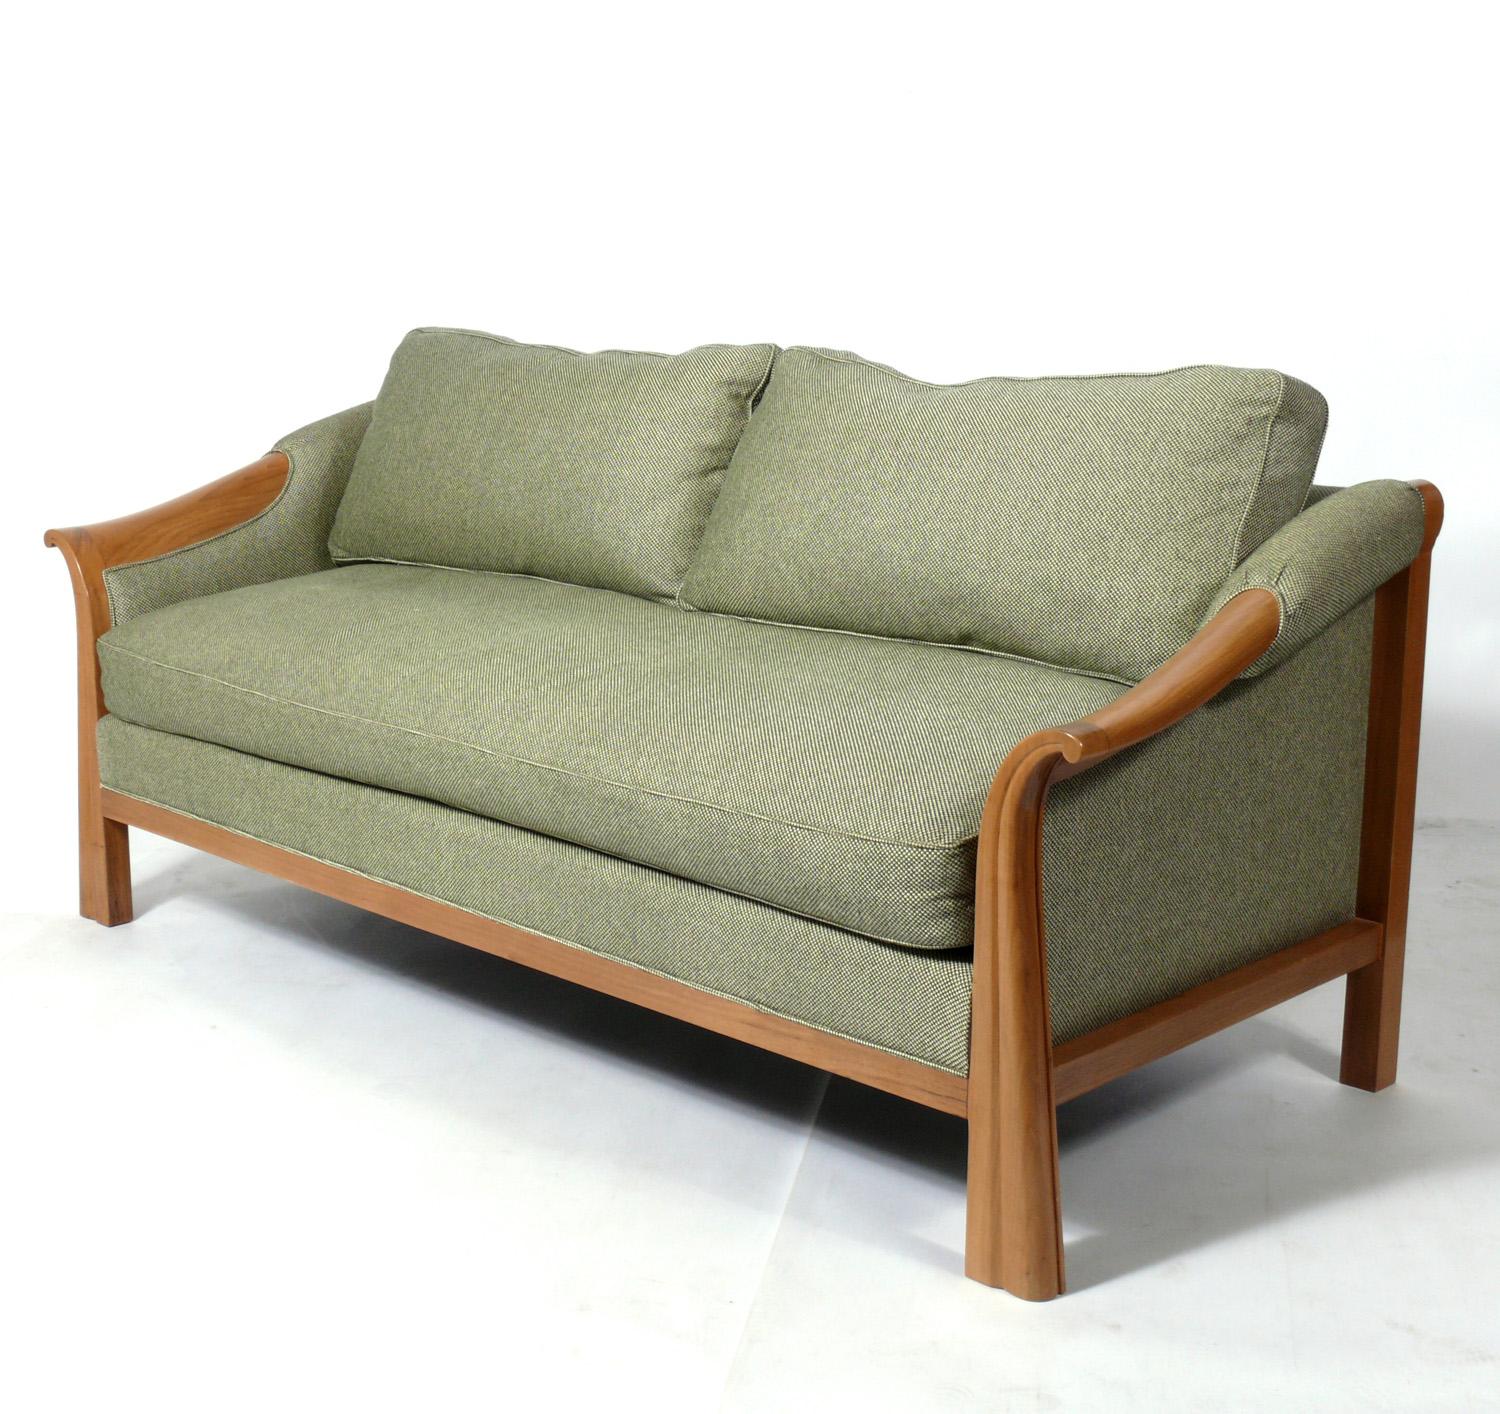 Pierre Chareau Art Deco style sofa, handmade by Nicholas Mongiardo, American, circa 1990s. Original sage green and ivory color fabric is in very good shape.